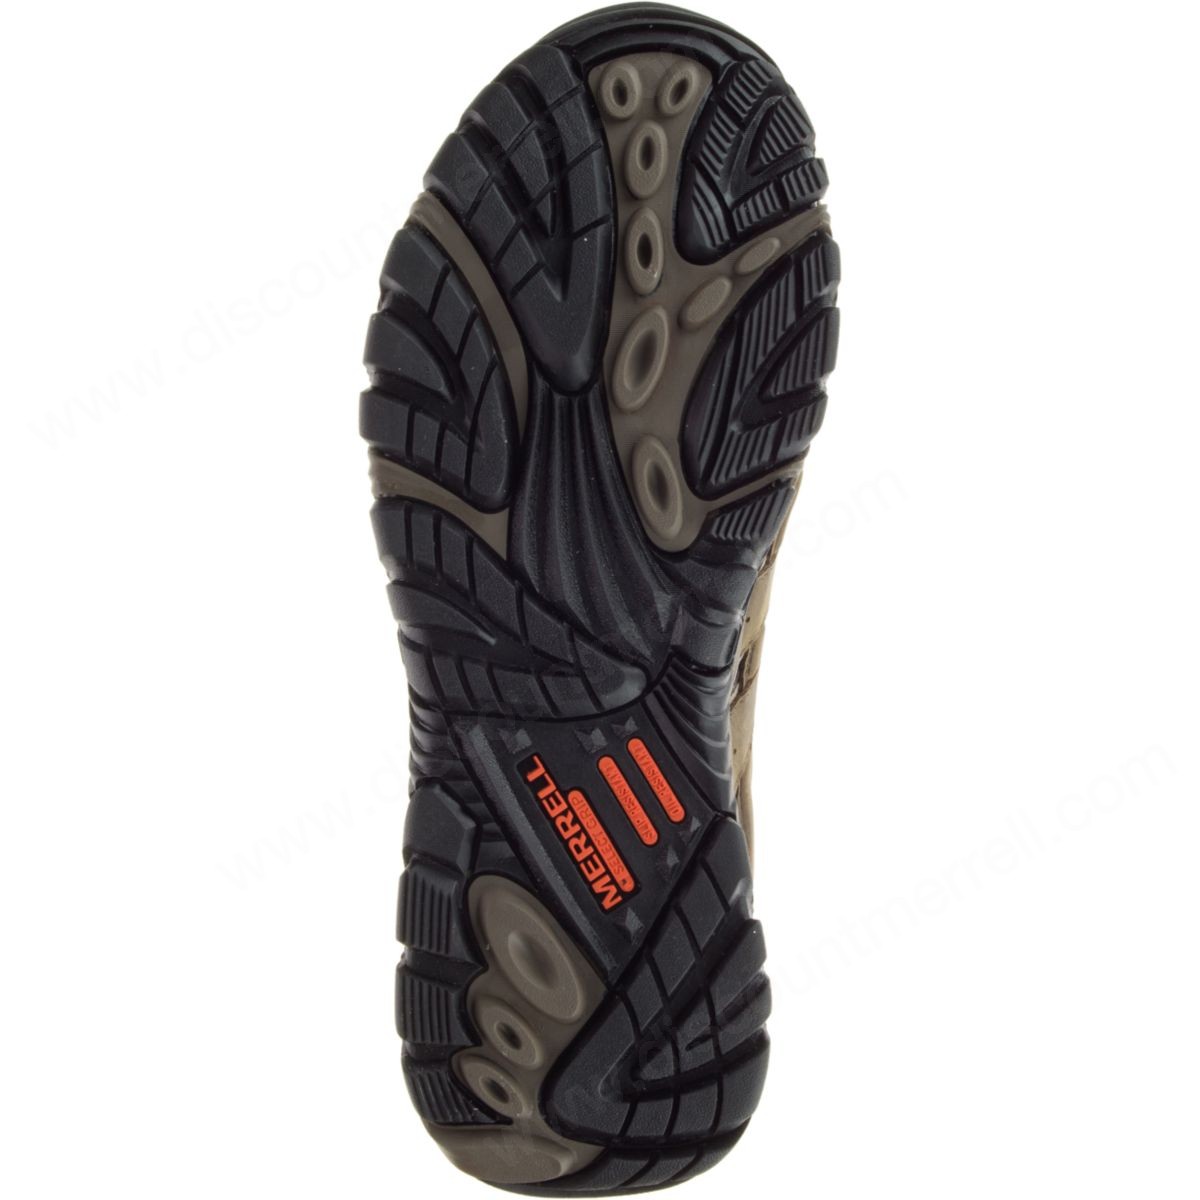 Merrell Man's Moab Ventilator Waterproof Work Shoes Boulder - -1